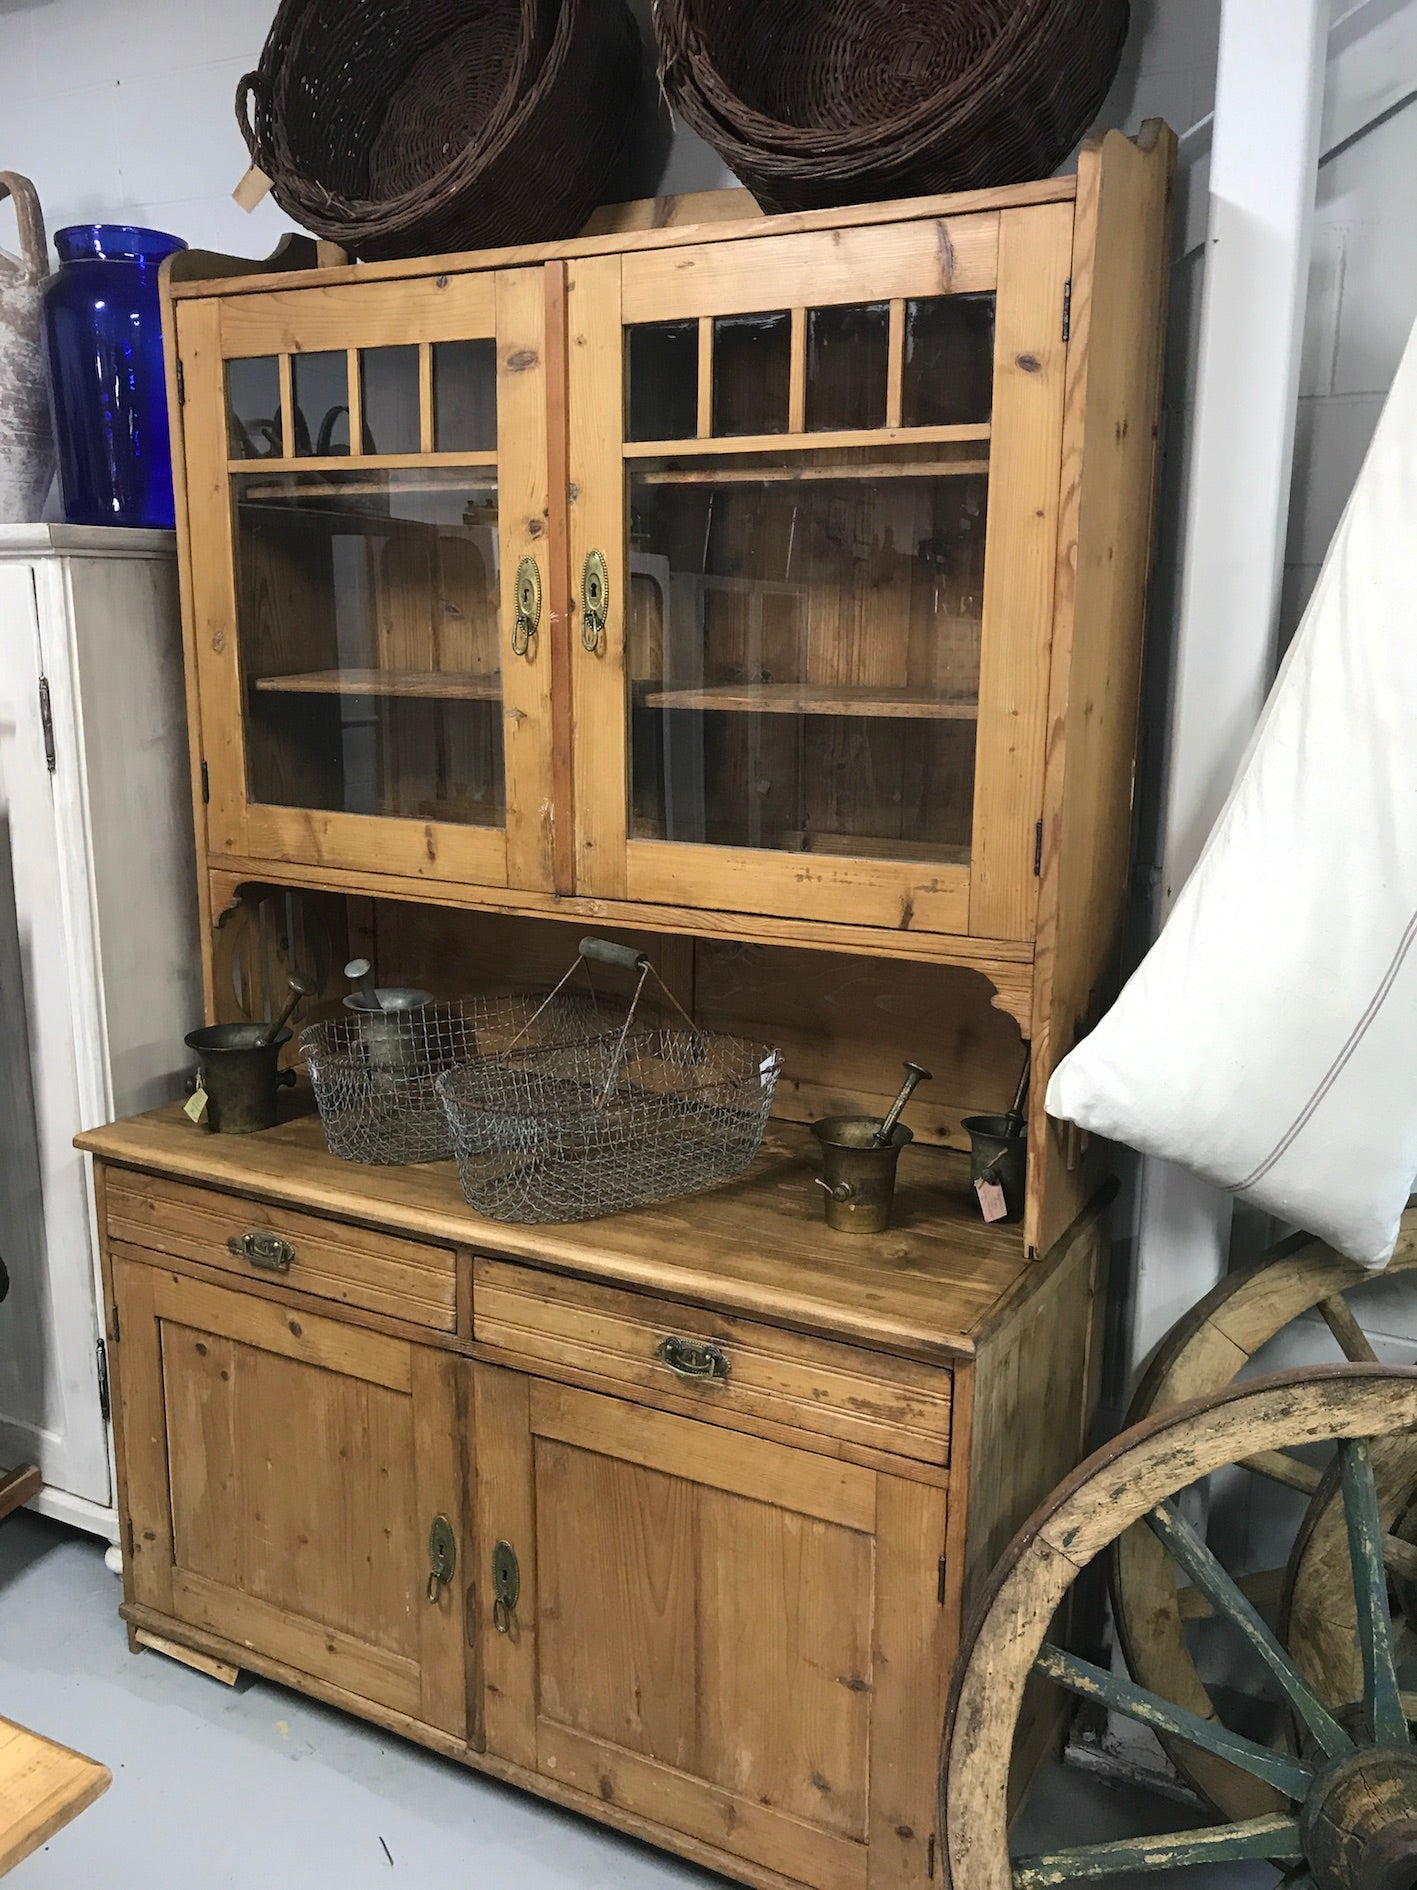 Vintage industrial European wooden kitchen cabinet #2131 all wood